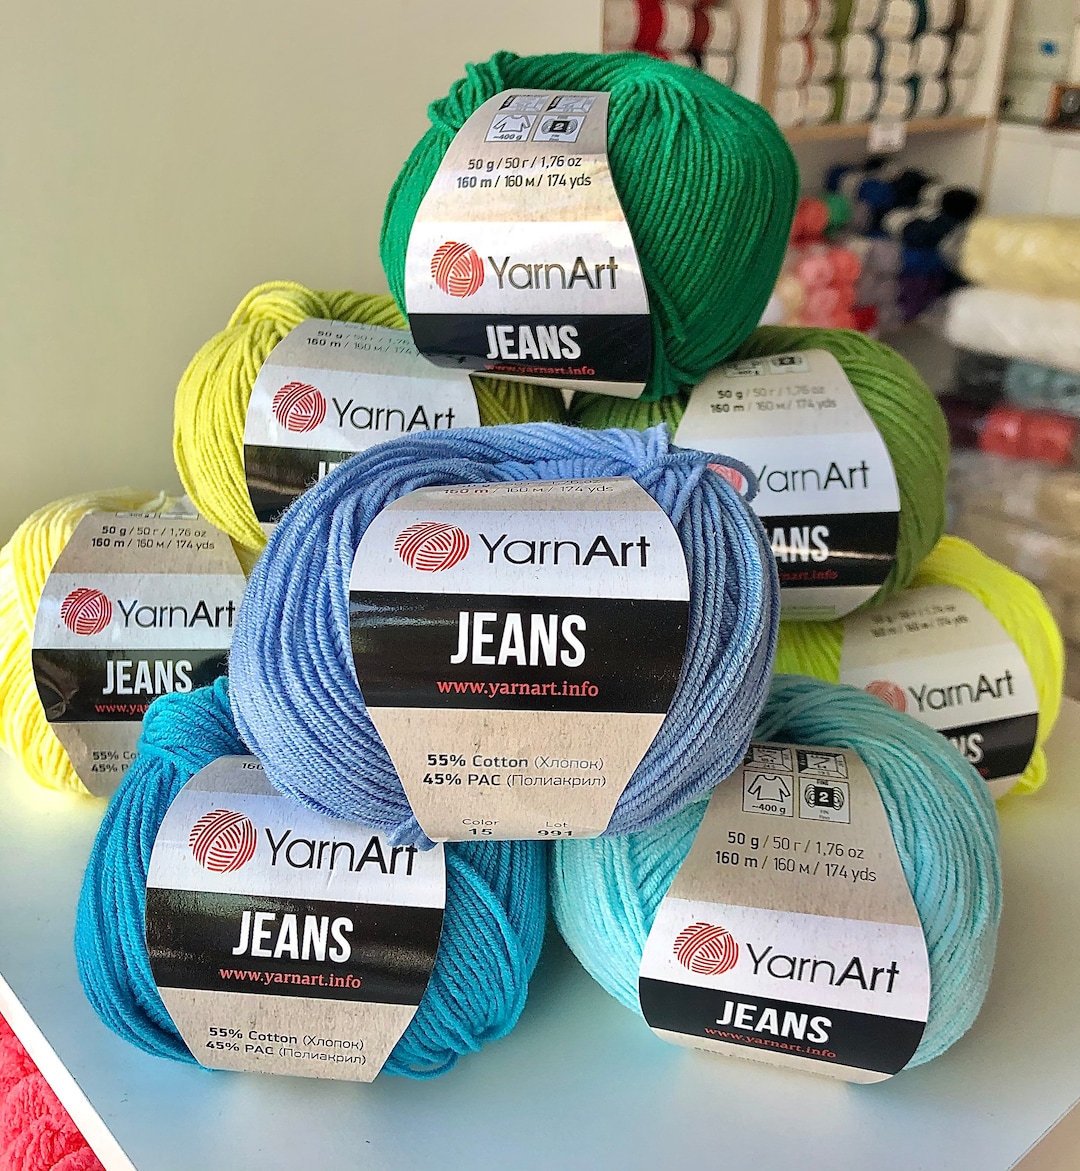 YarnArt Jeans Yarn Art 50g (1,76 oz) 160m (174 yds) Various Colors!